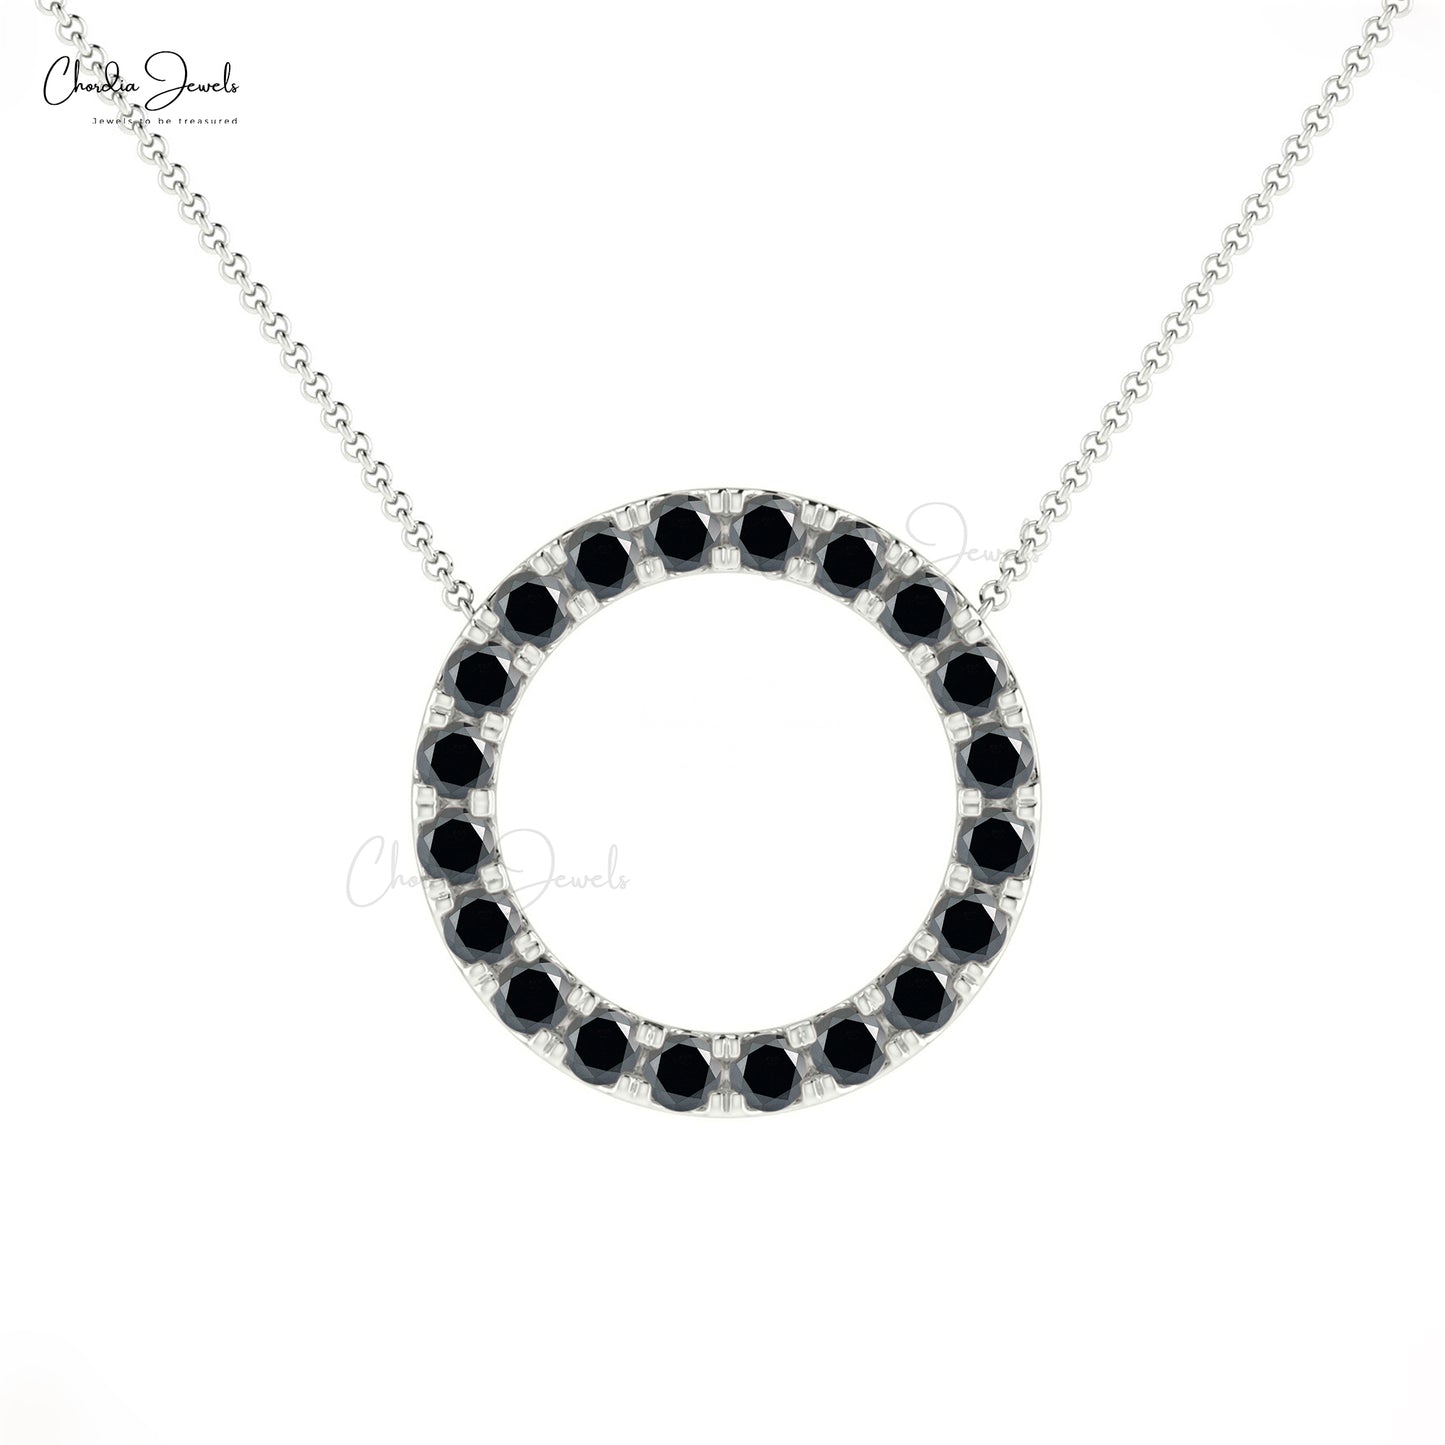 Buy Black Diamond Necklace